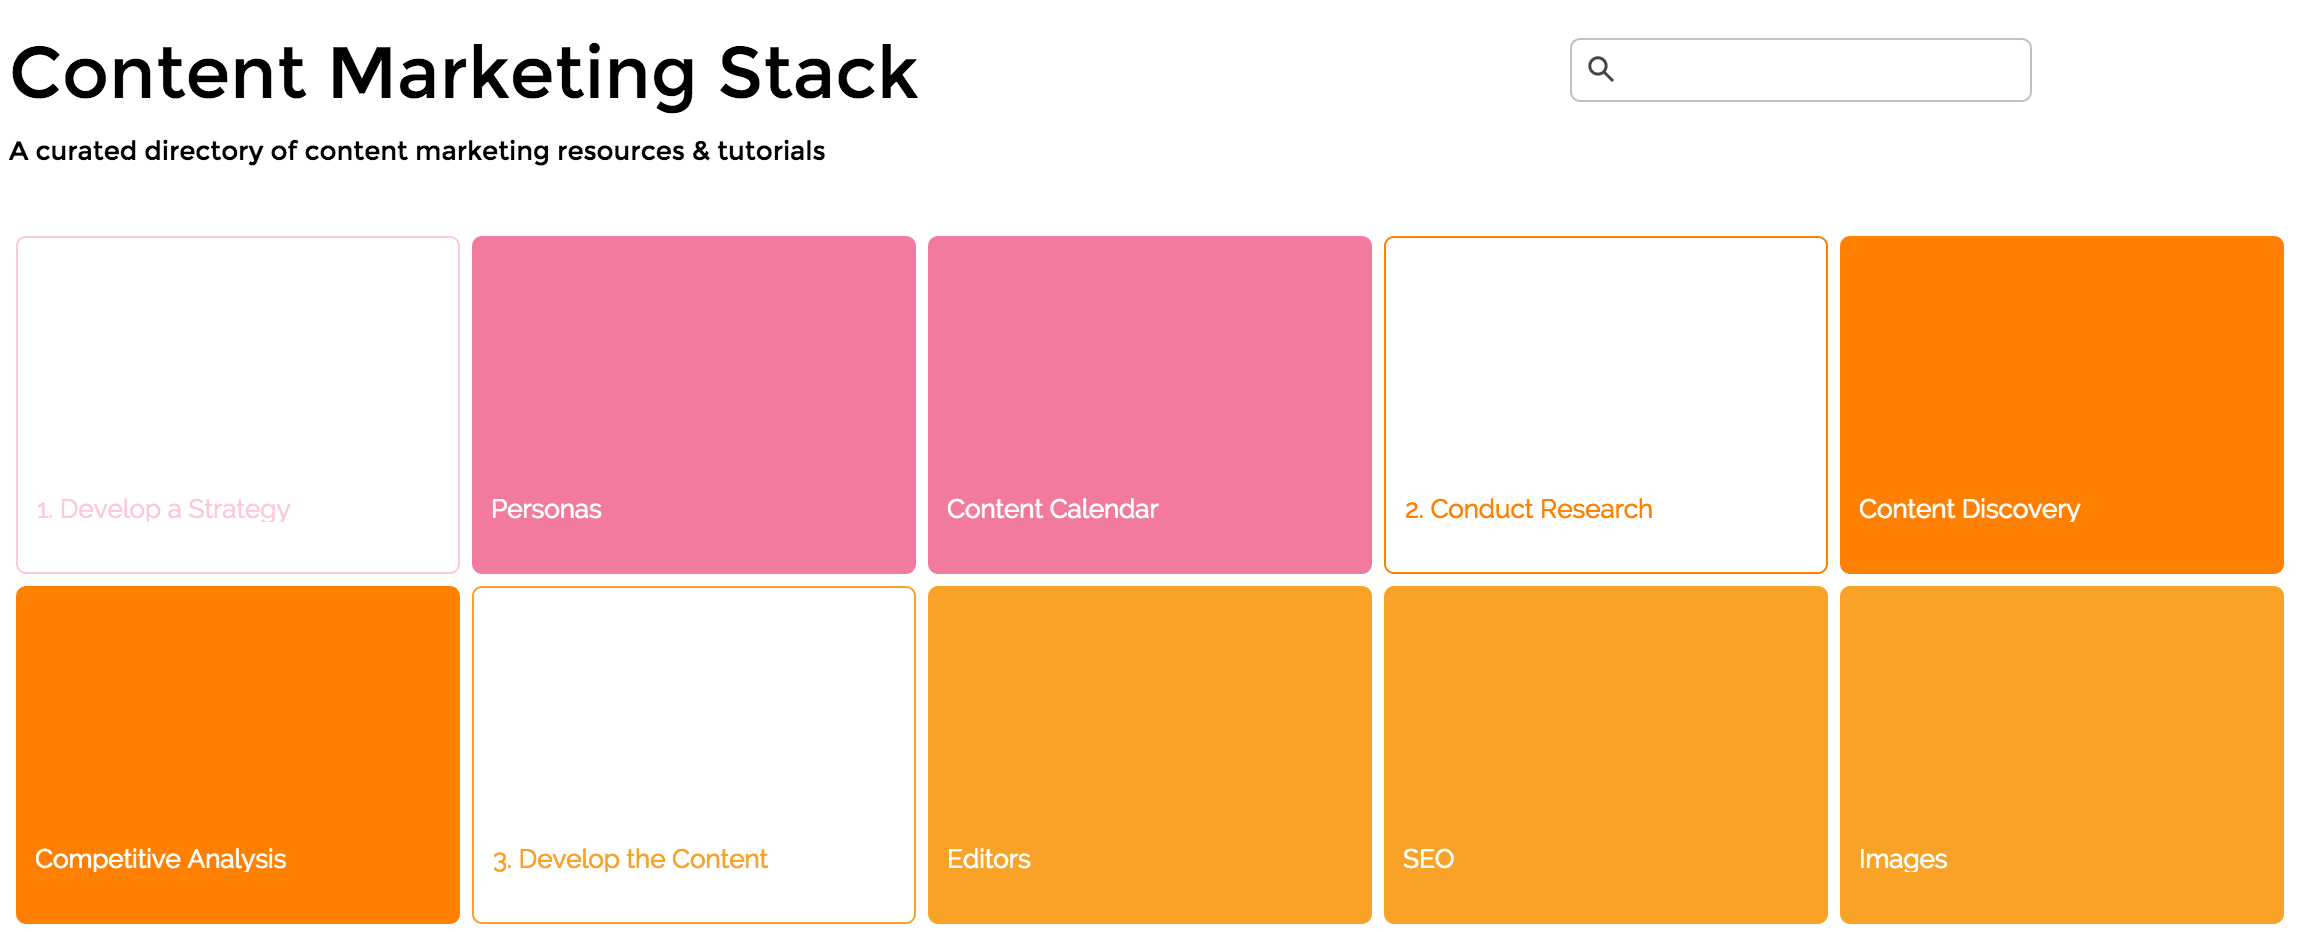 Contentmarketing stack